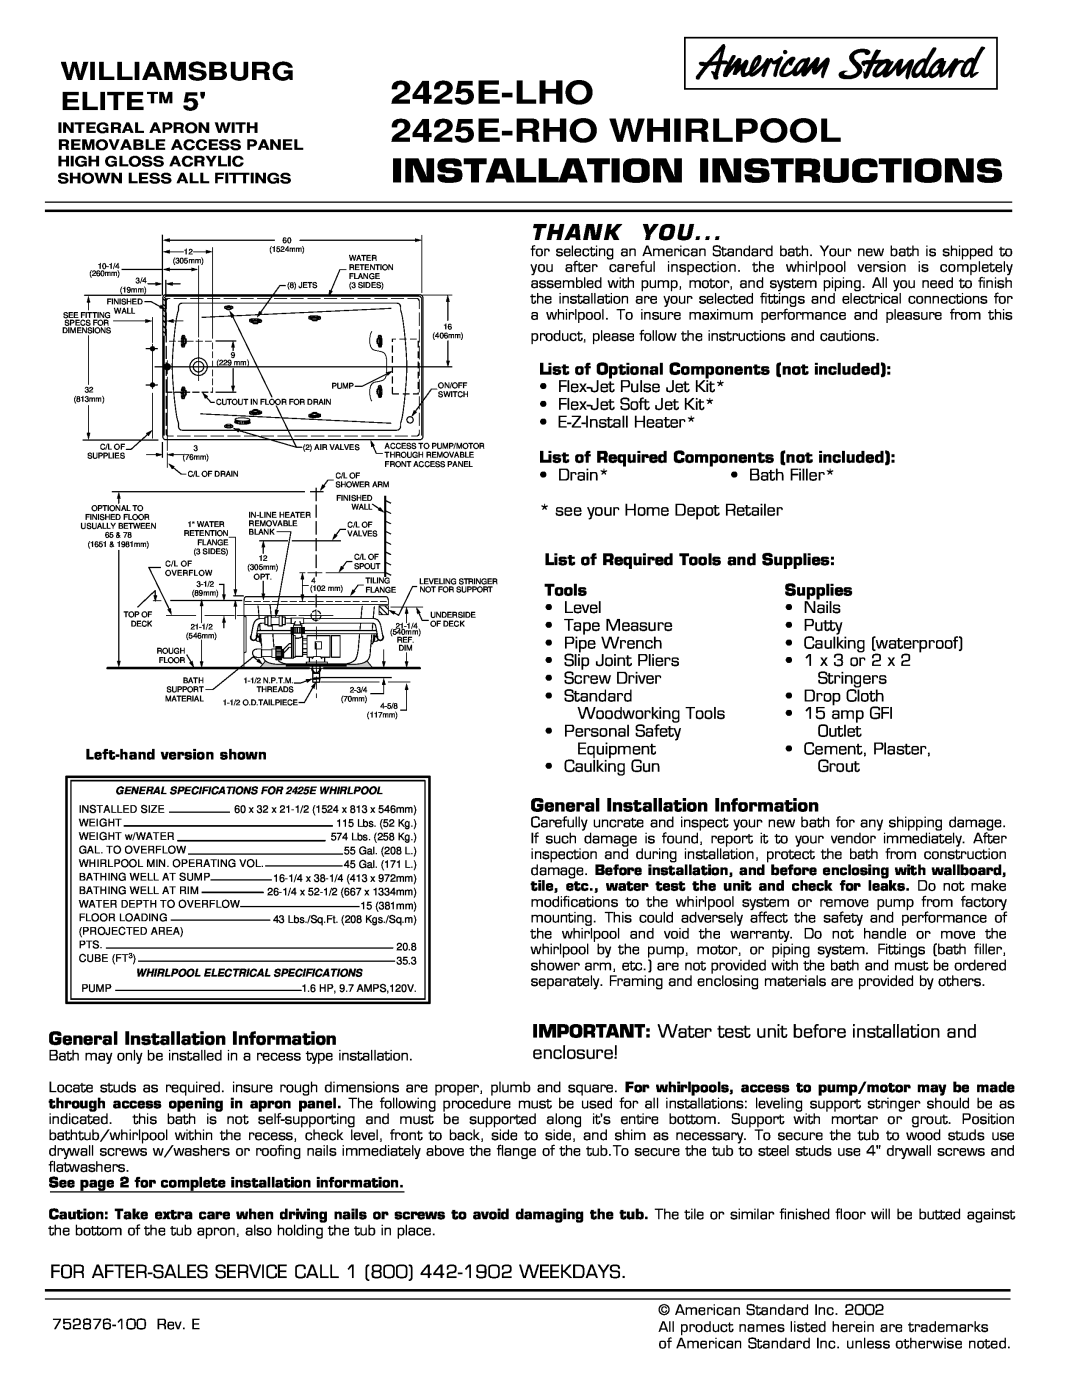 American Standard 2425E-RHO installation instructions General Installation Information, enclosure, Tools, Supplies 